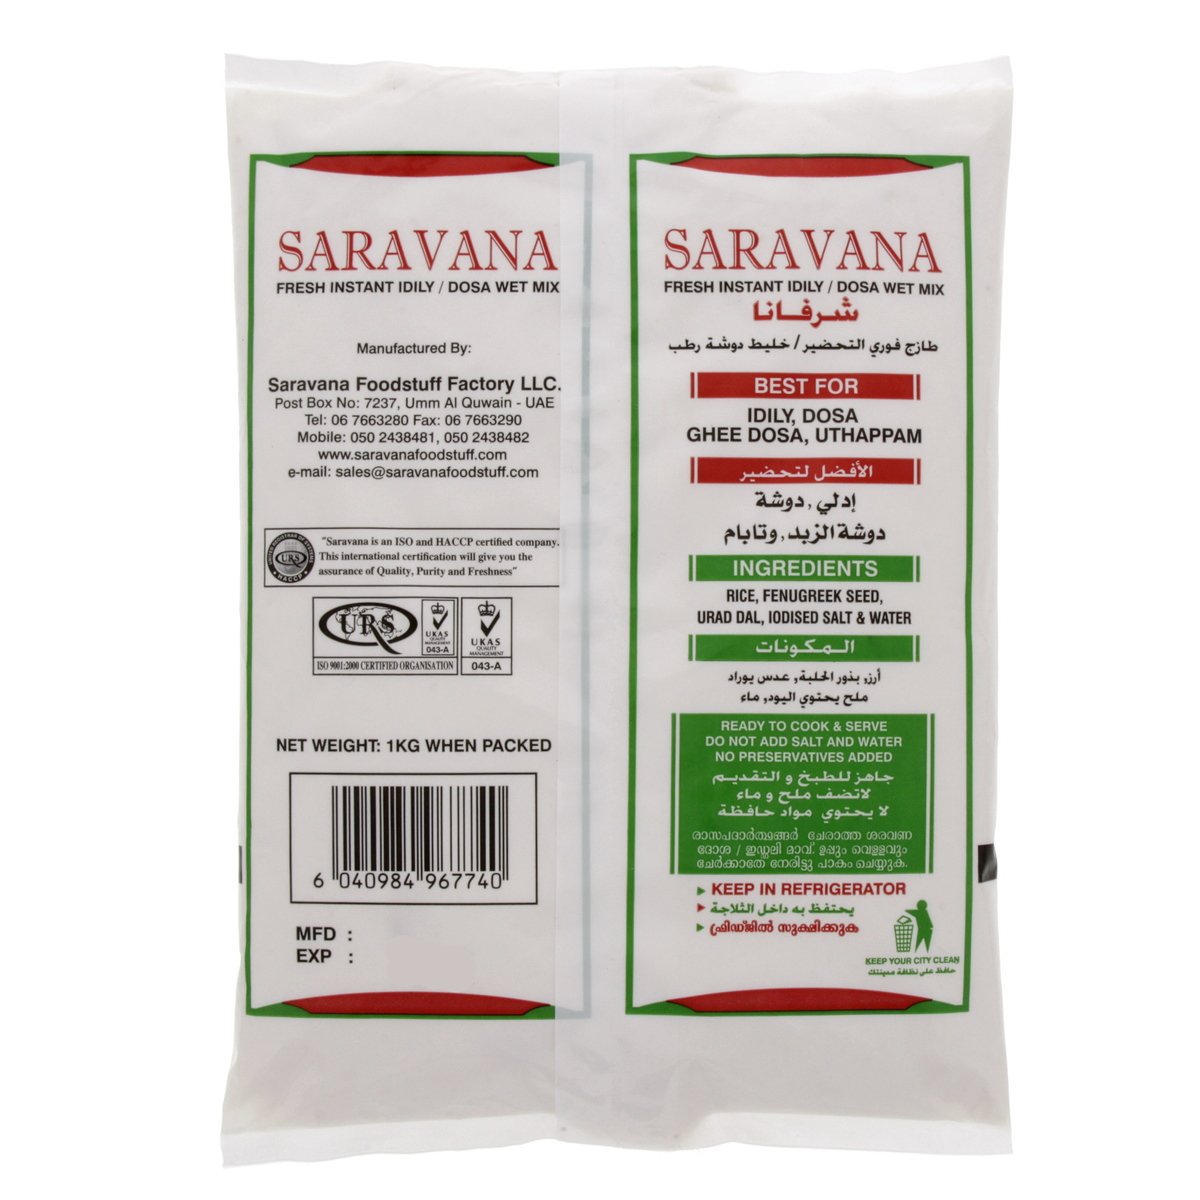 Saravana Instant Idily/Dosa Wet Mix 1 kg